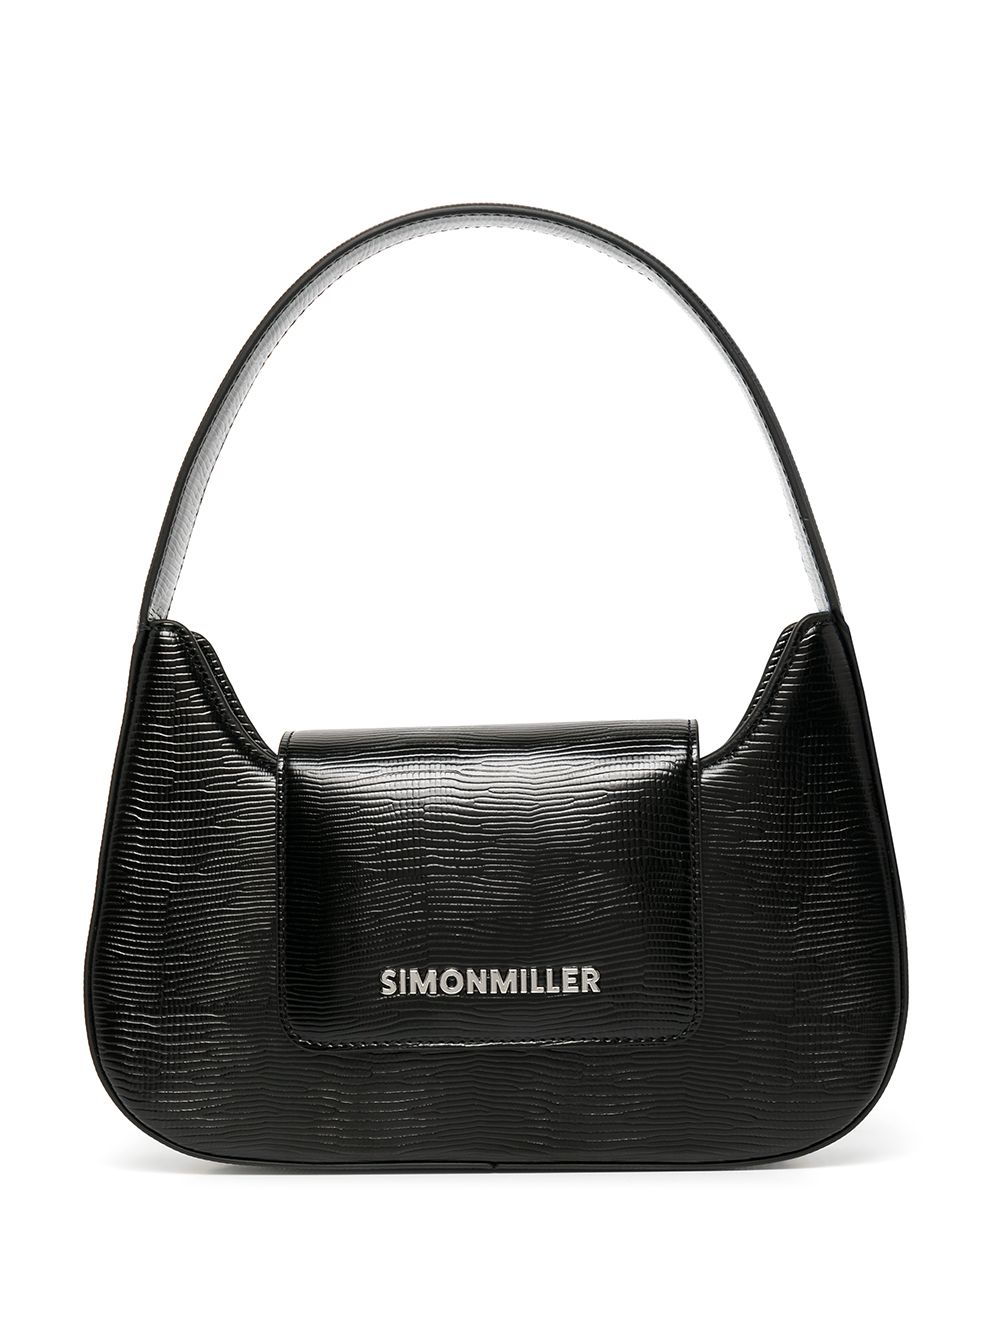 Simon Miller Retro shoulder bag